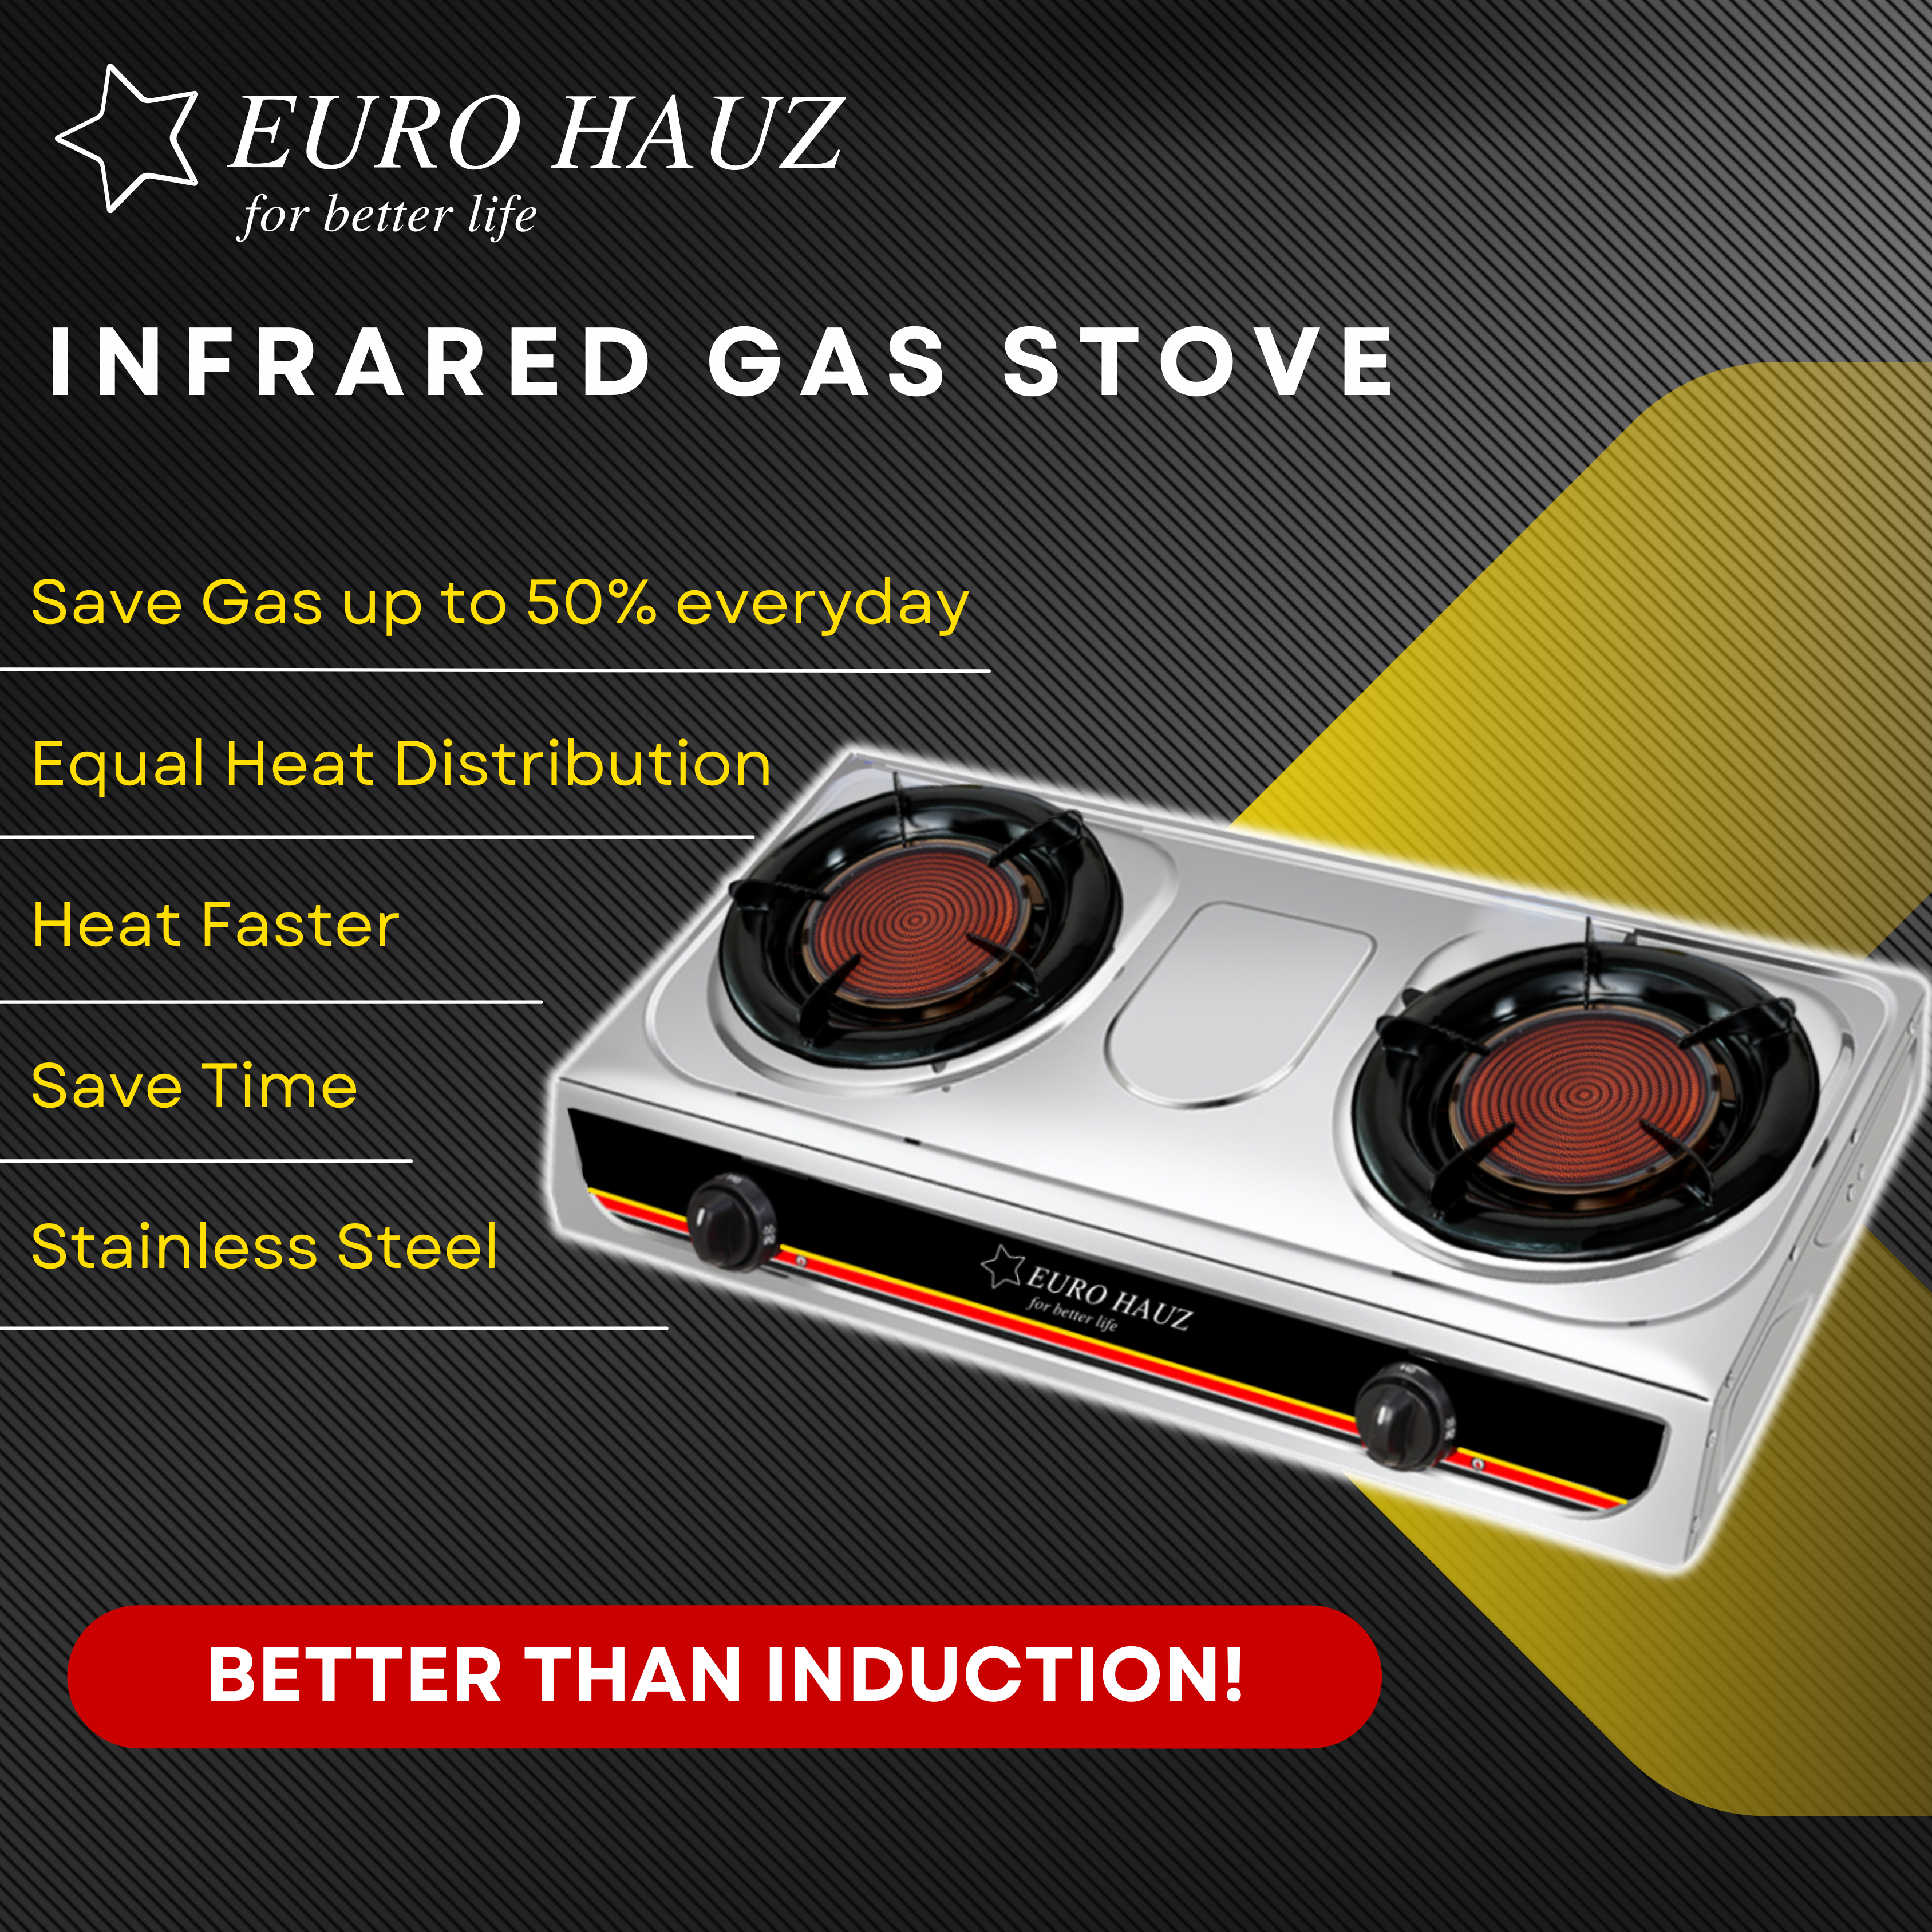 EuroHauz™ Infrared Gas Stove with FREEBIES